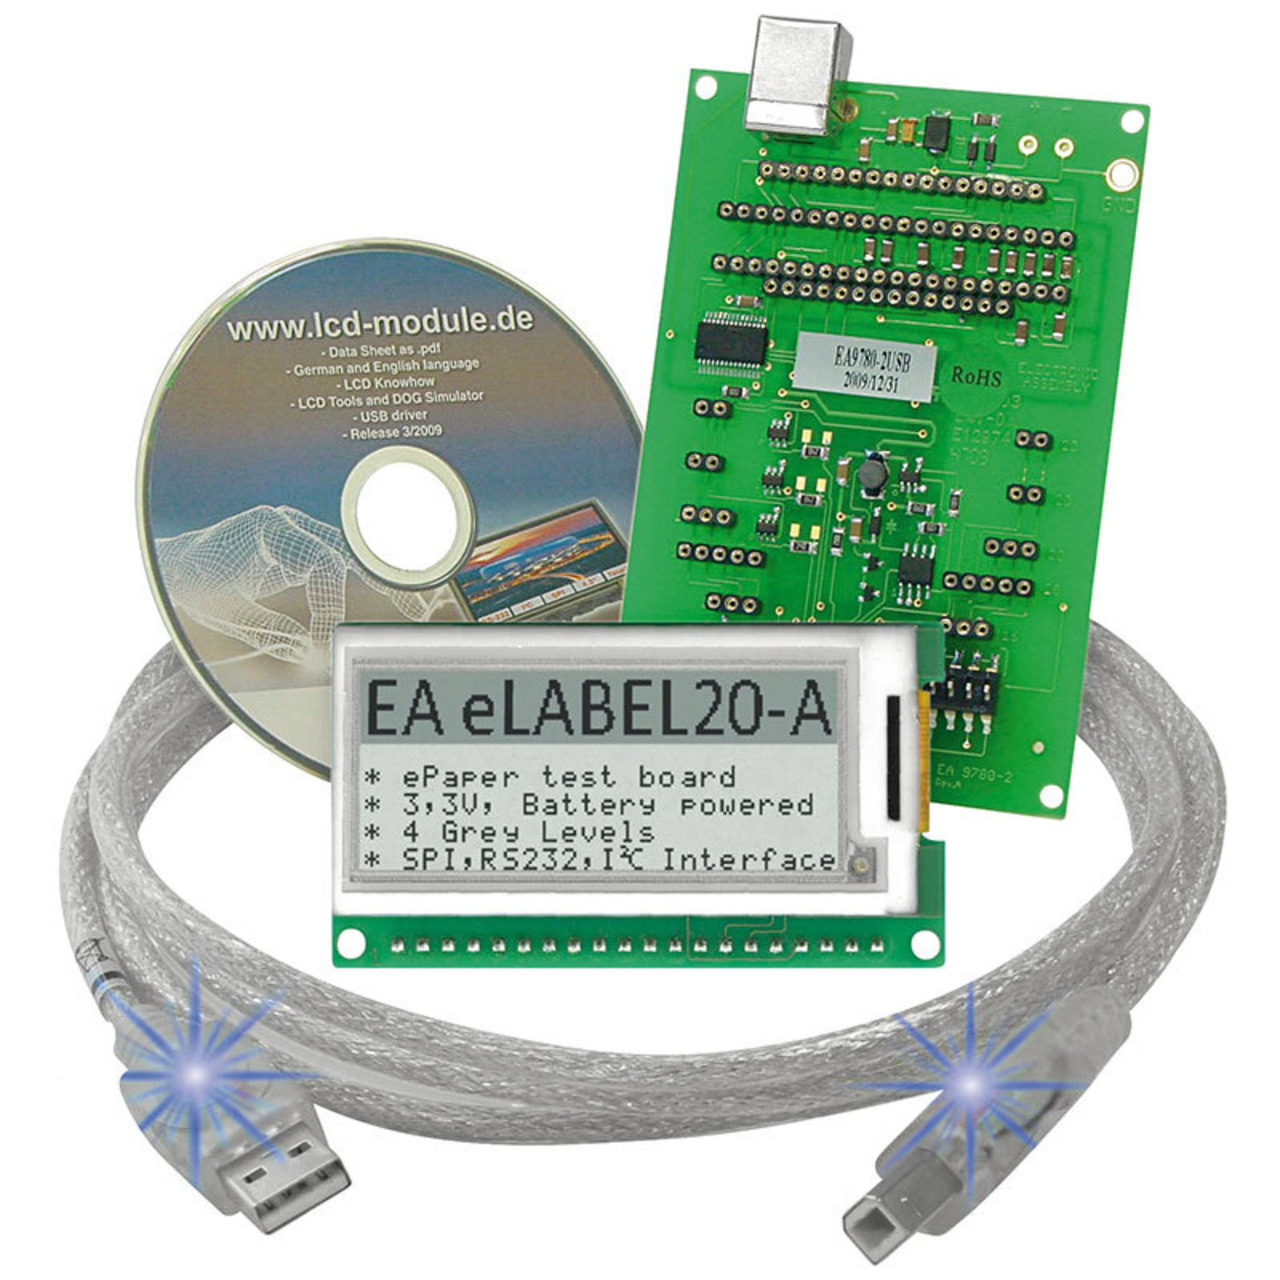 Electronic Assembly ePaper Display EA EVALEPA20-A- 172 x 72 Pixel- mit Ansteuerung und USB-Interface unter Komponenten